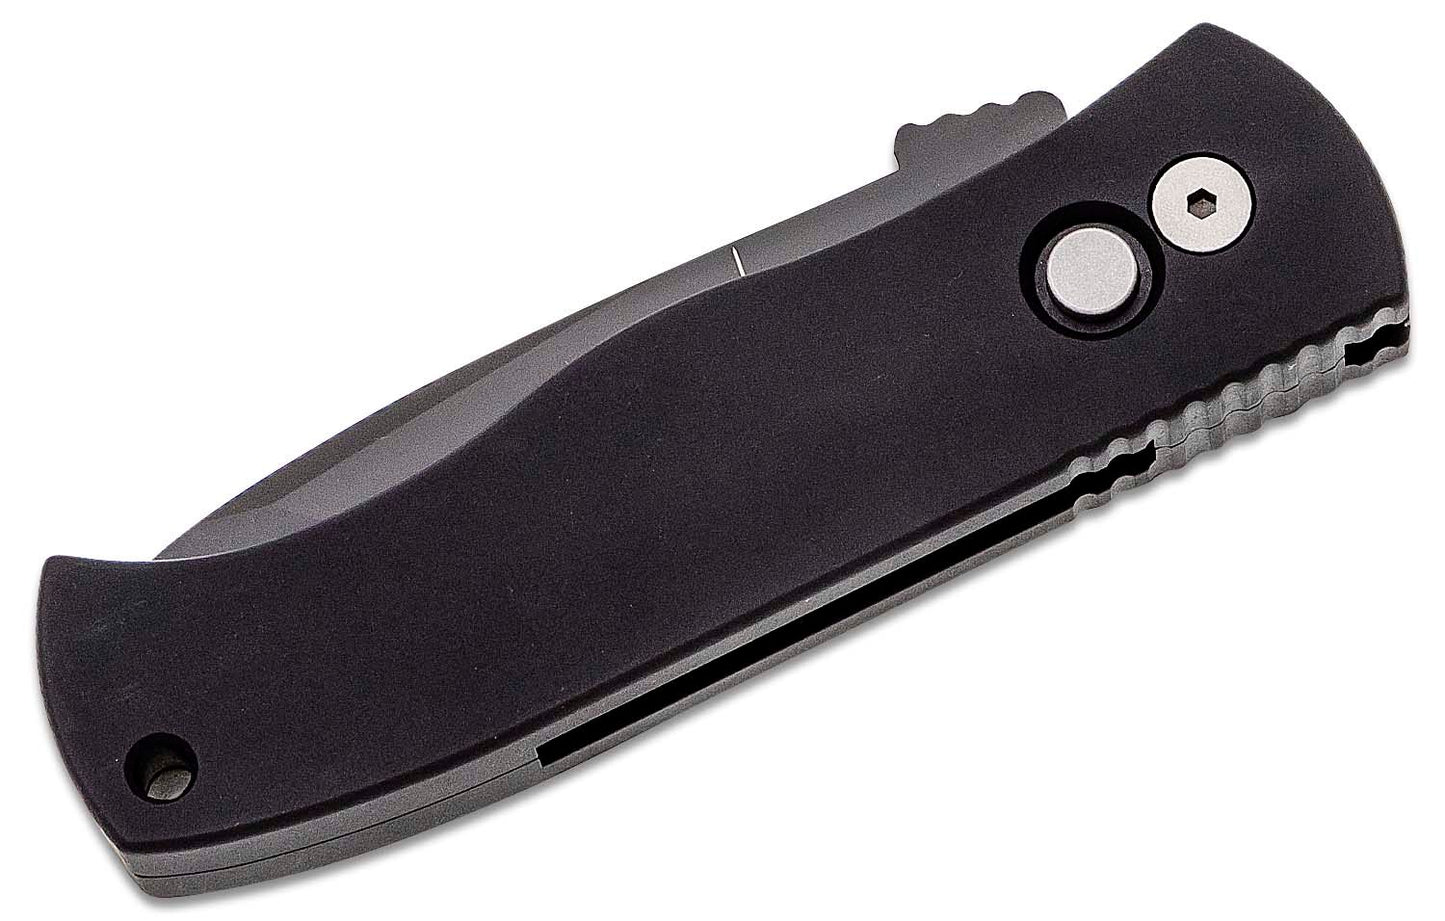 E7T03 Emerson CQC7 AUTO Folding Knife 3.25" 154CM Black DLC Plain Blade, Black Aluminum Handles